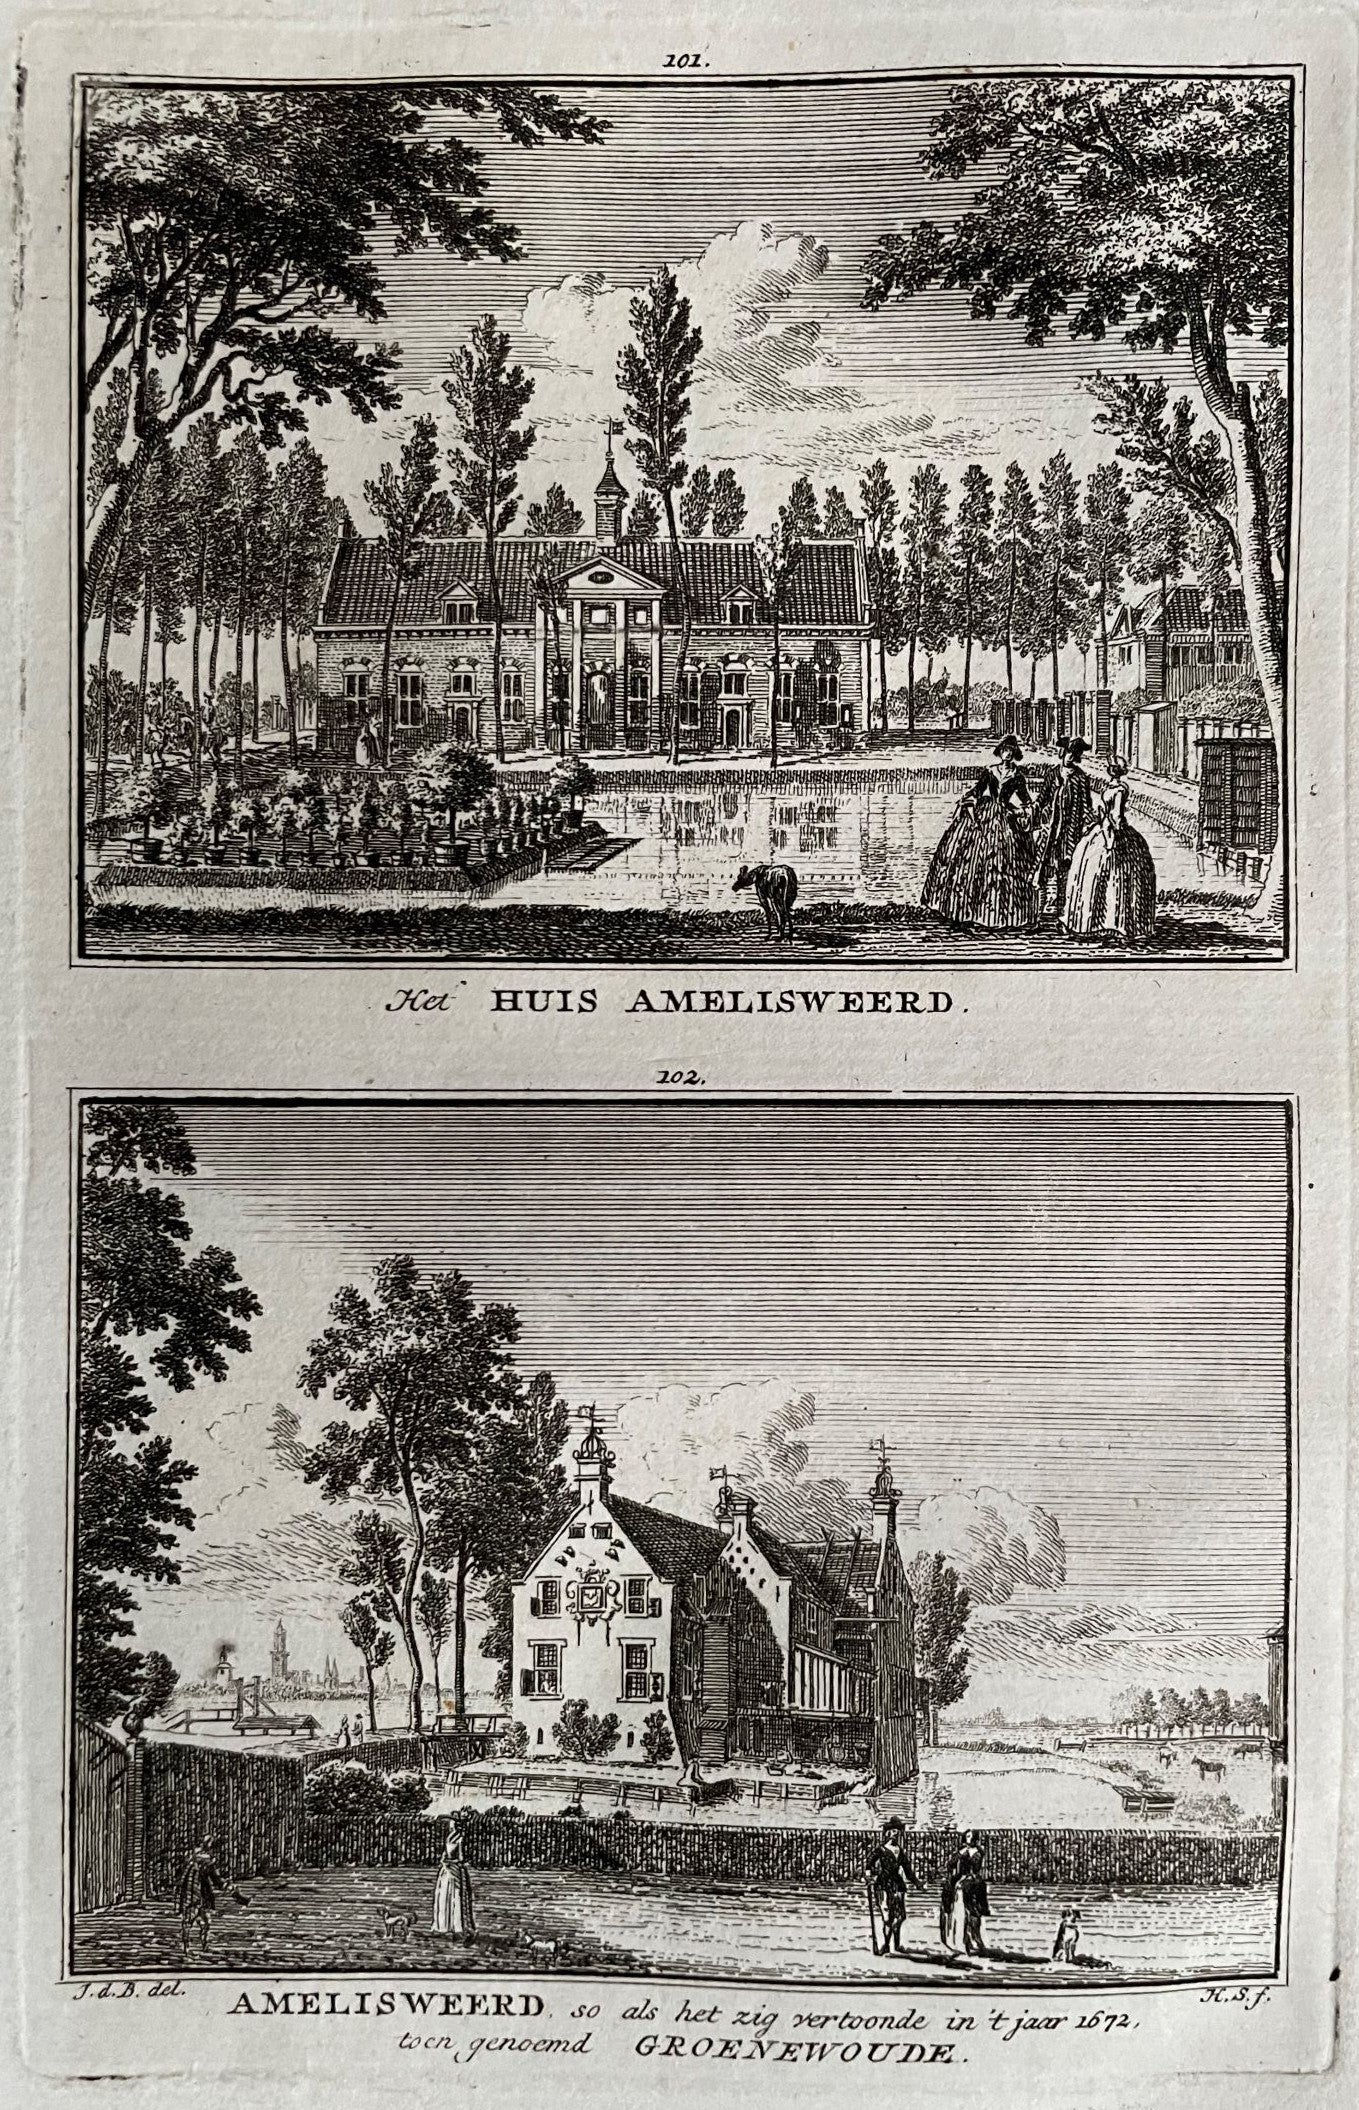 Bunnik Amelisweerd - Spilman - ca. 1750